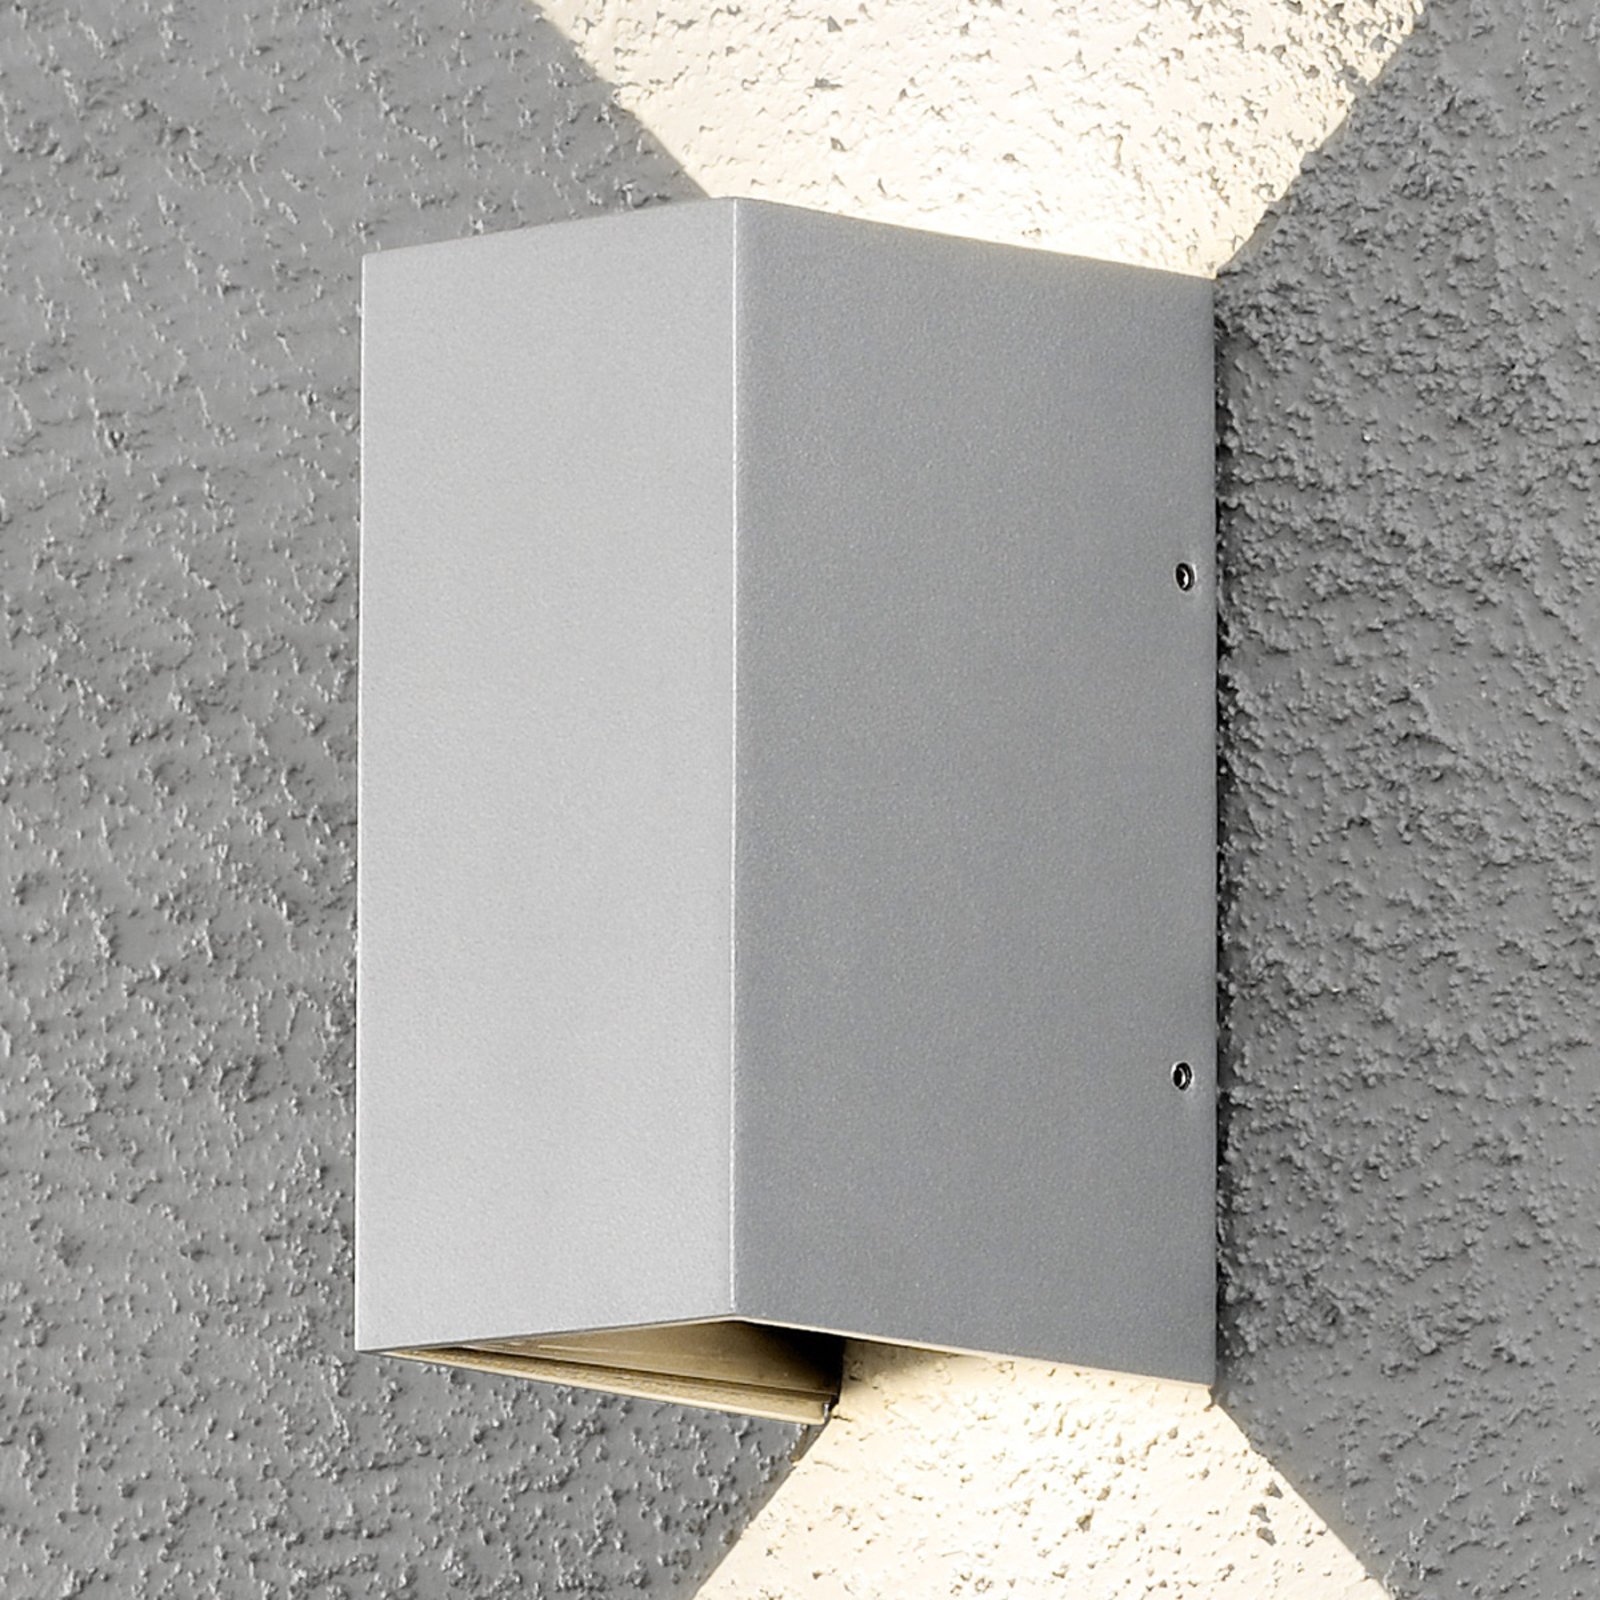 Cremona LED outdoor wall light 8 cm grey